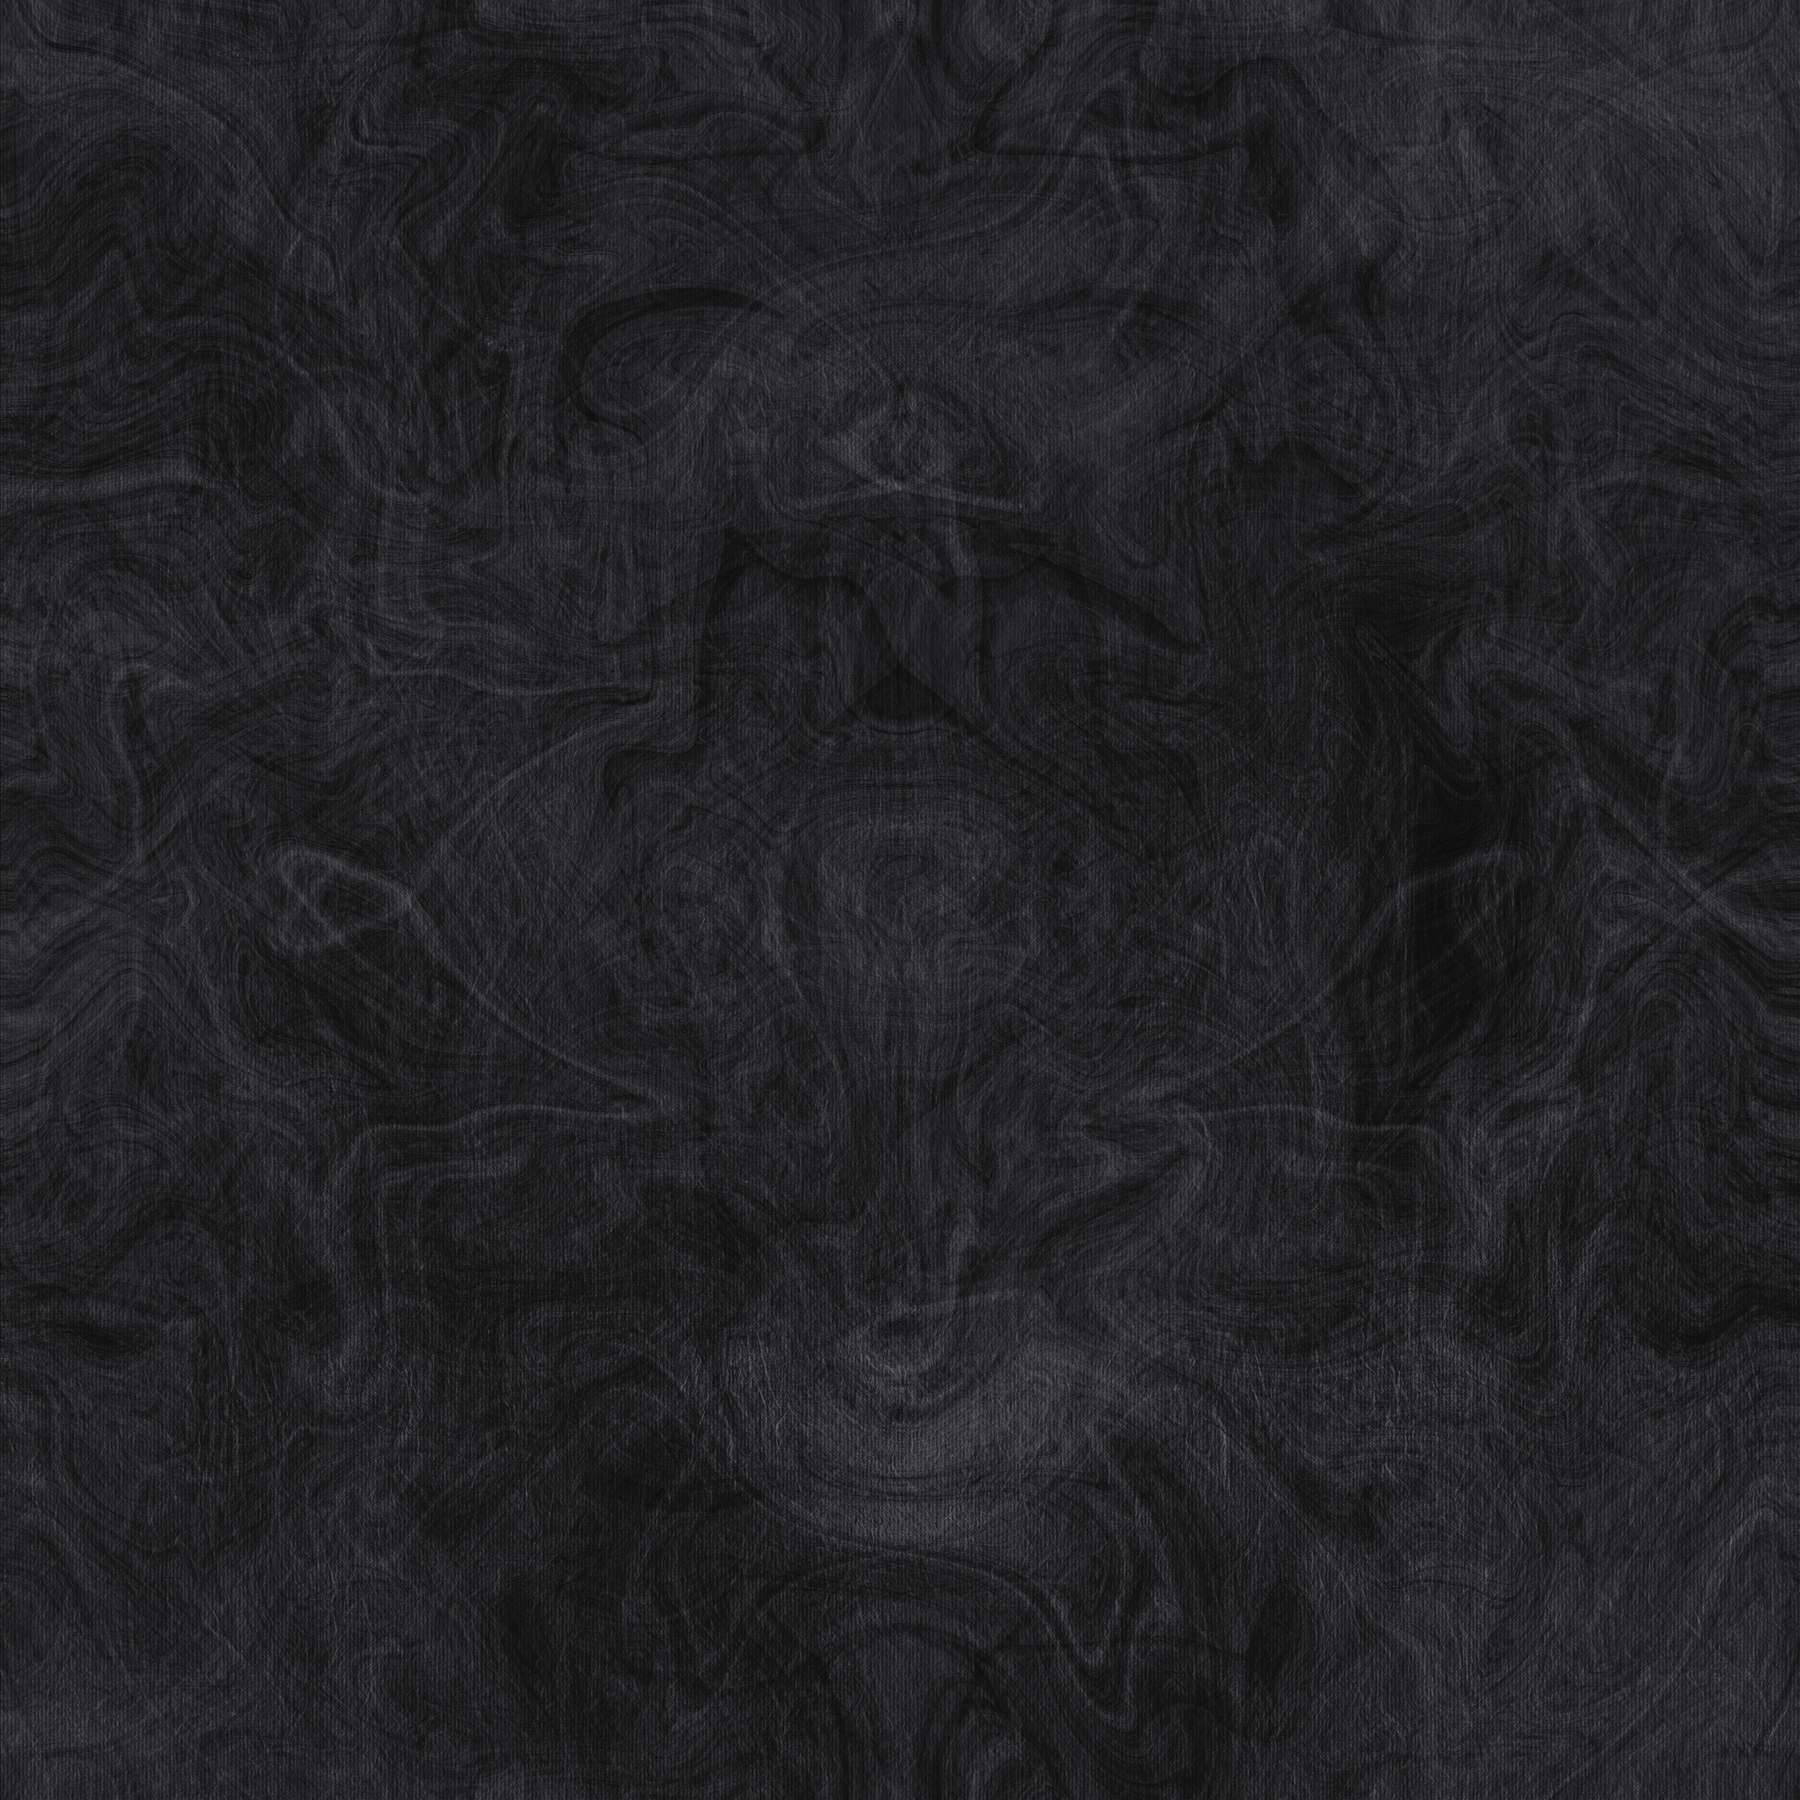 Black Texture Background